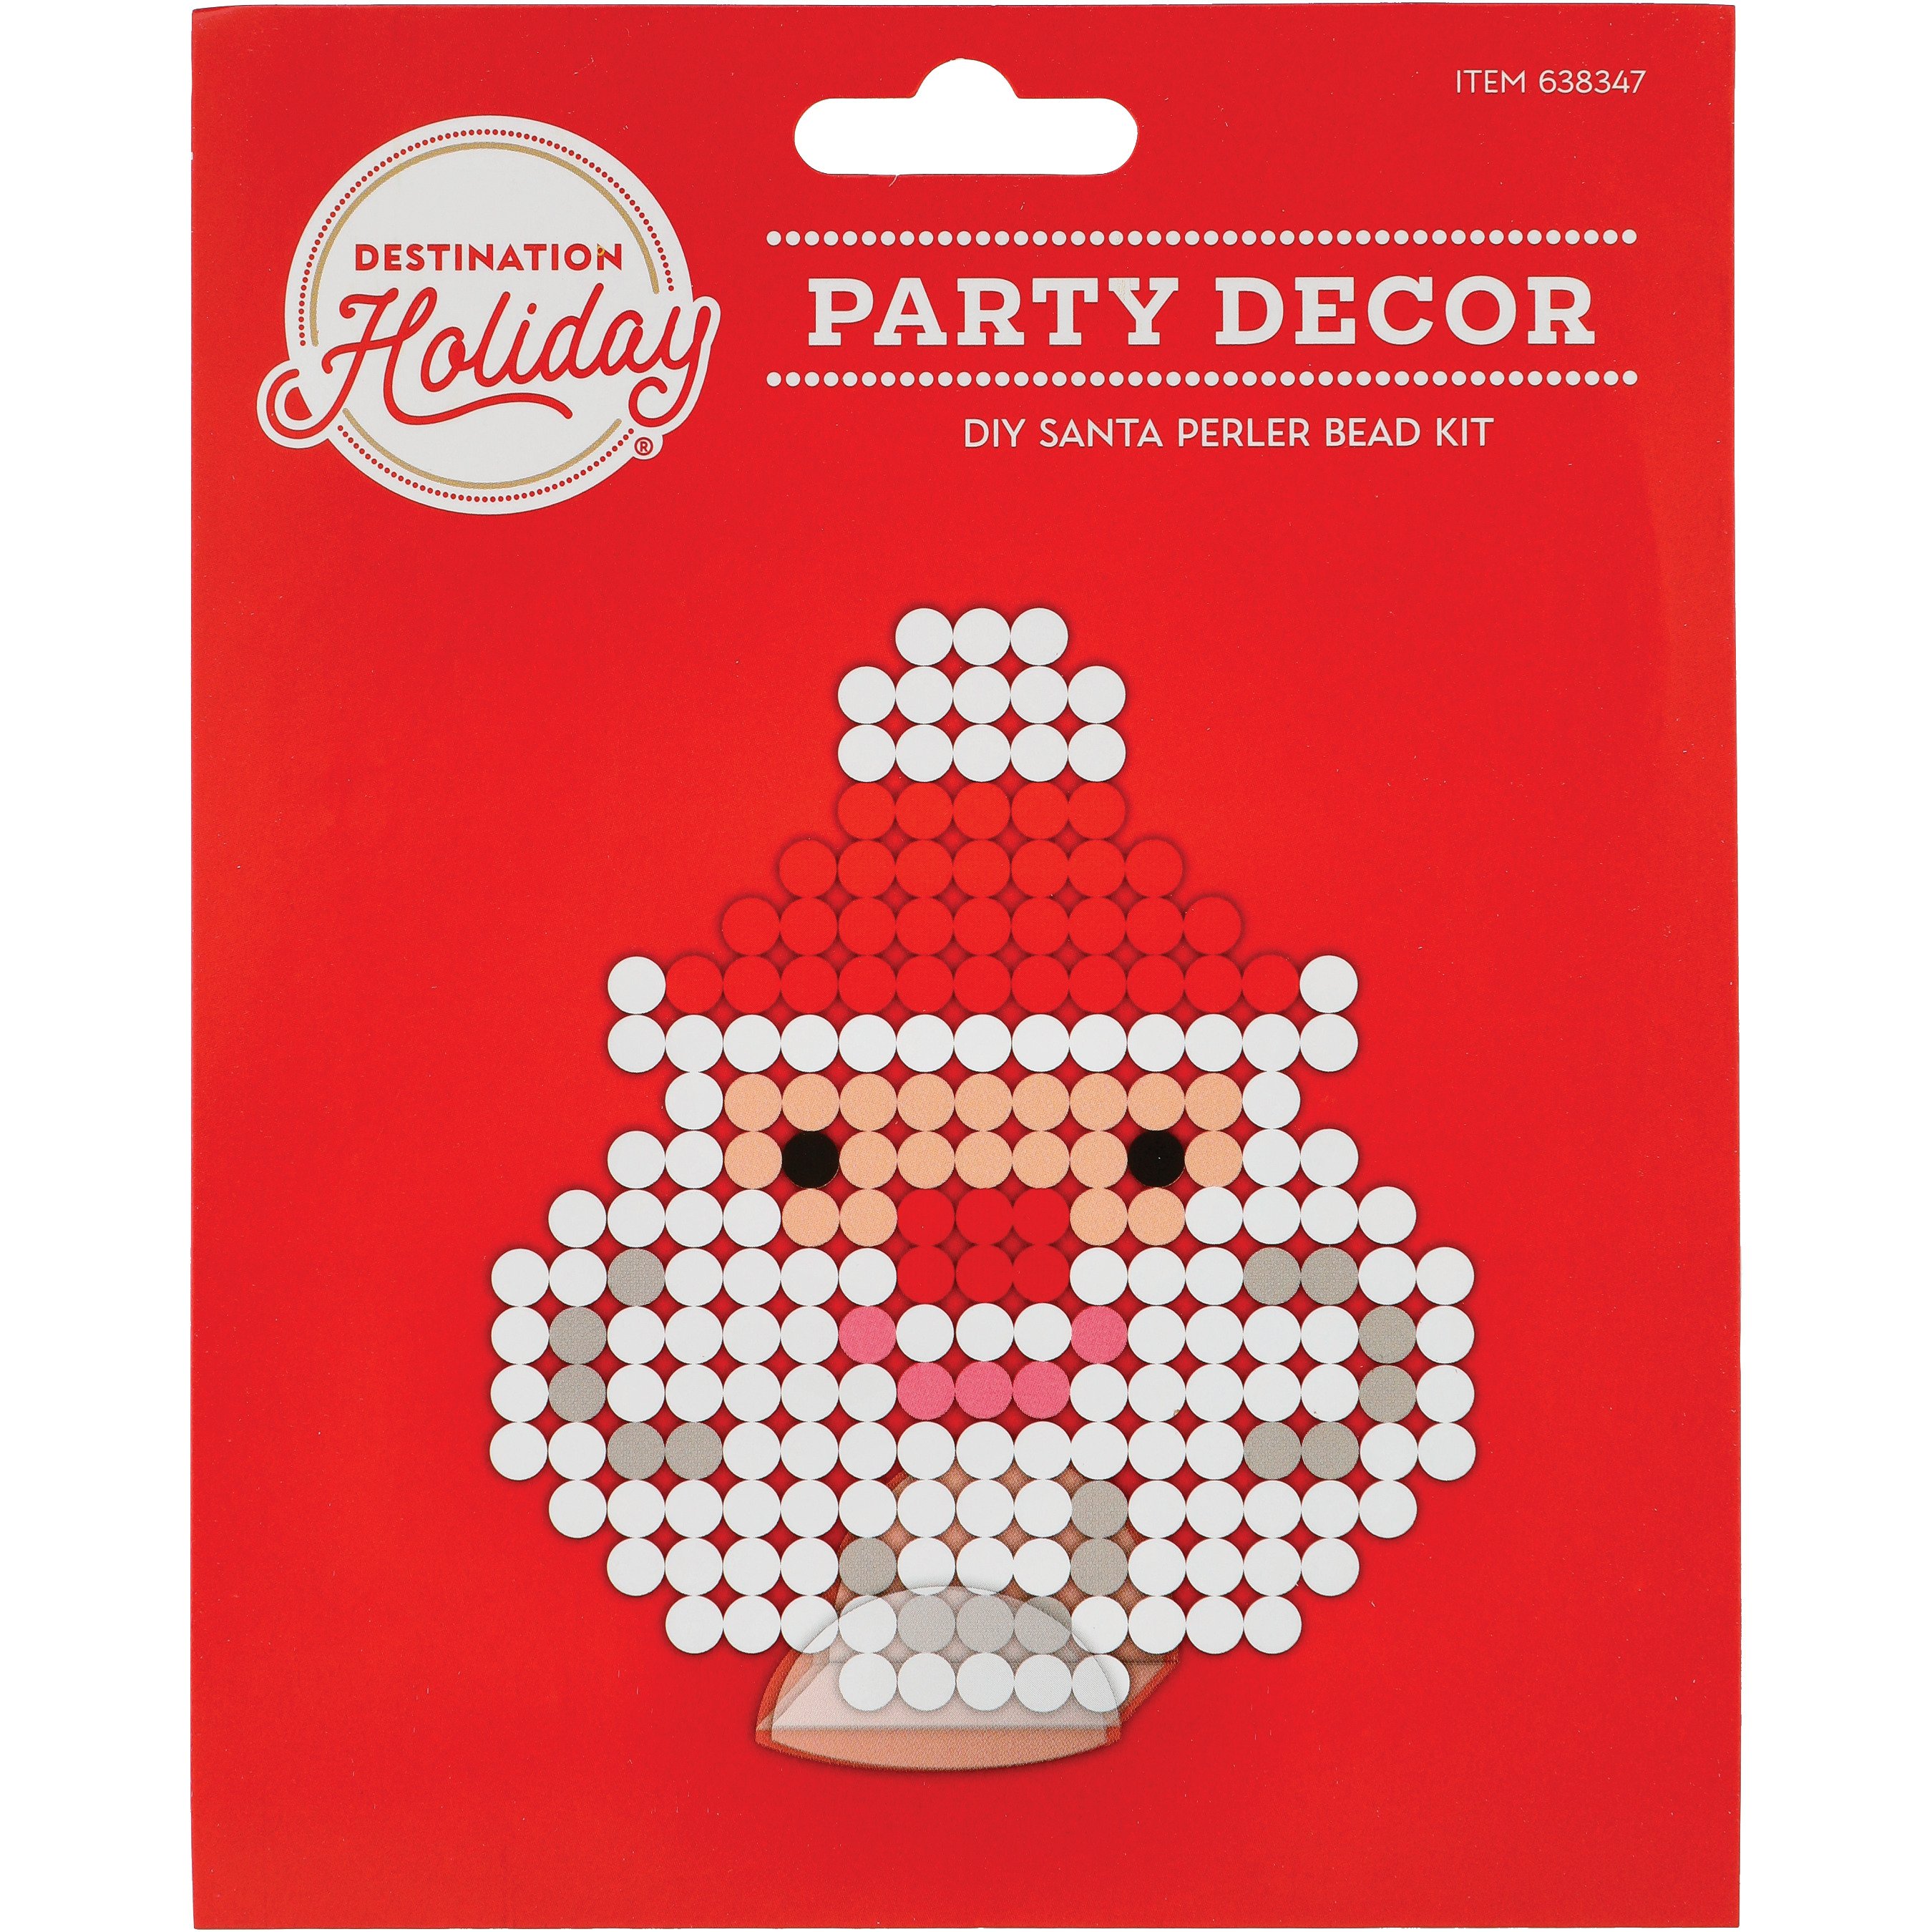 Destination Holiday DIY Santa Perler Bead Kit - Shop Party Decor at H-E-B